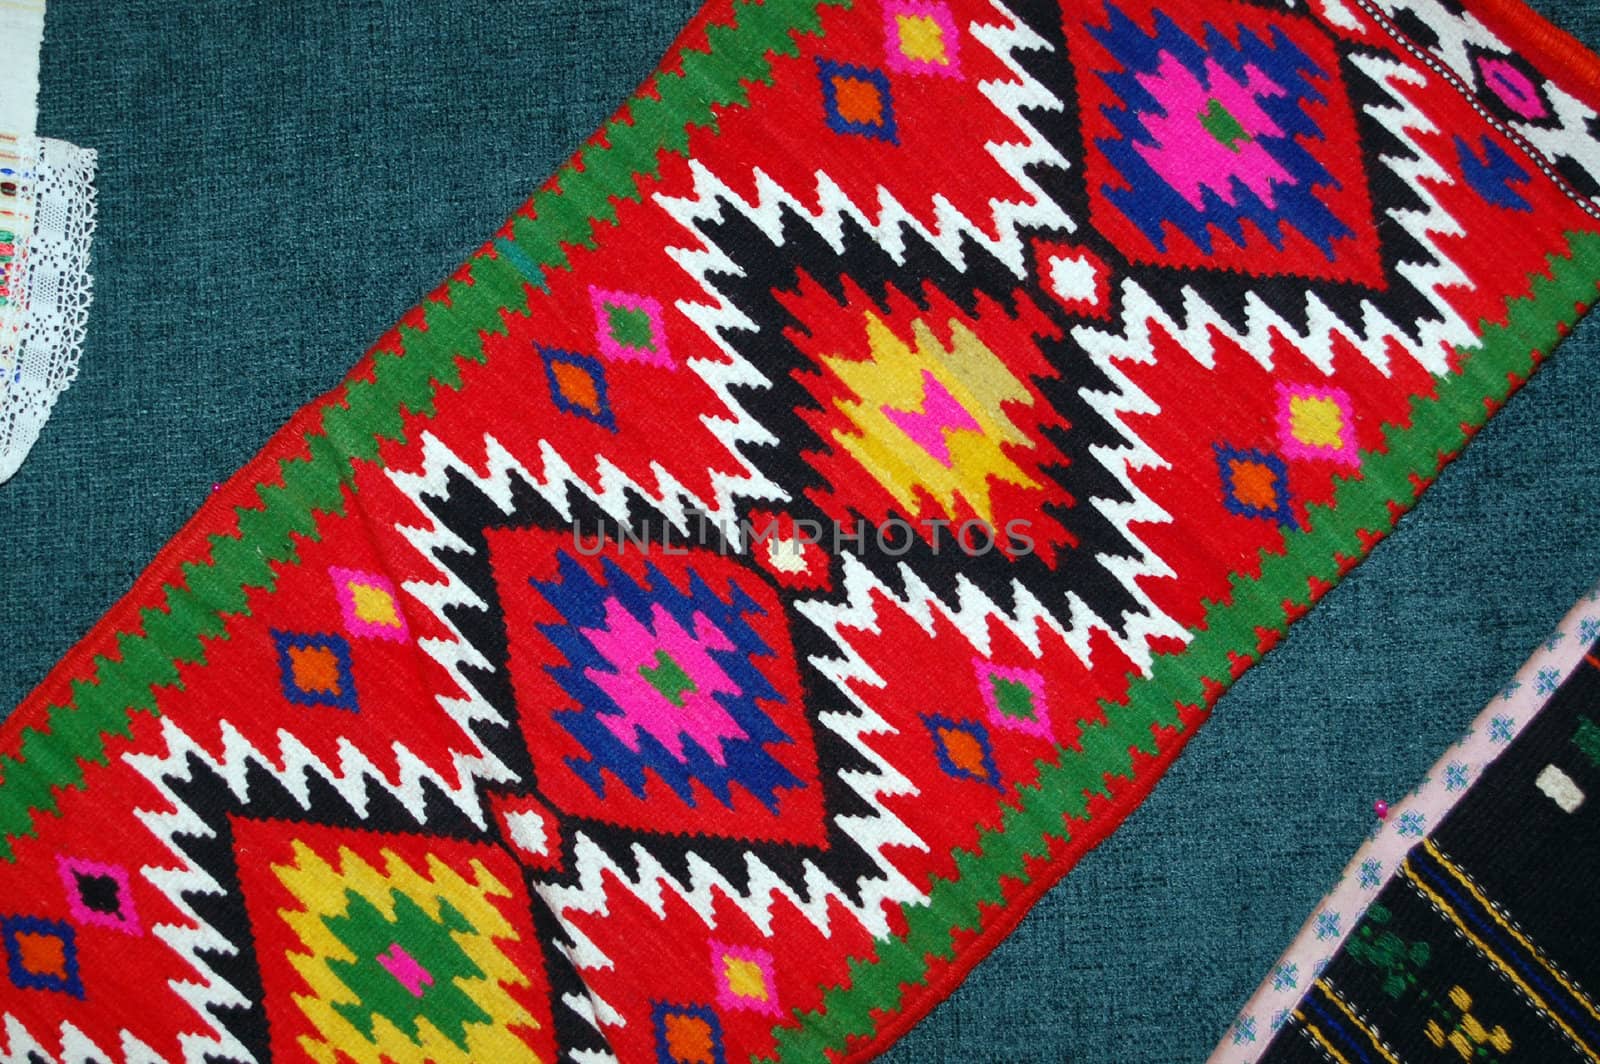 Traditional Macedonian Carpet Patterns
